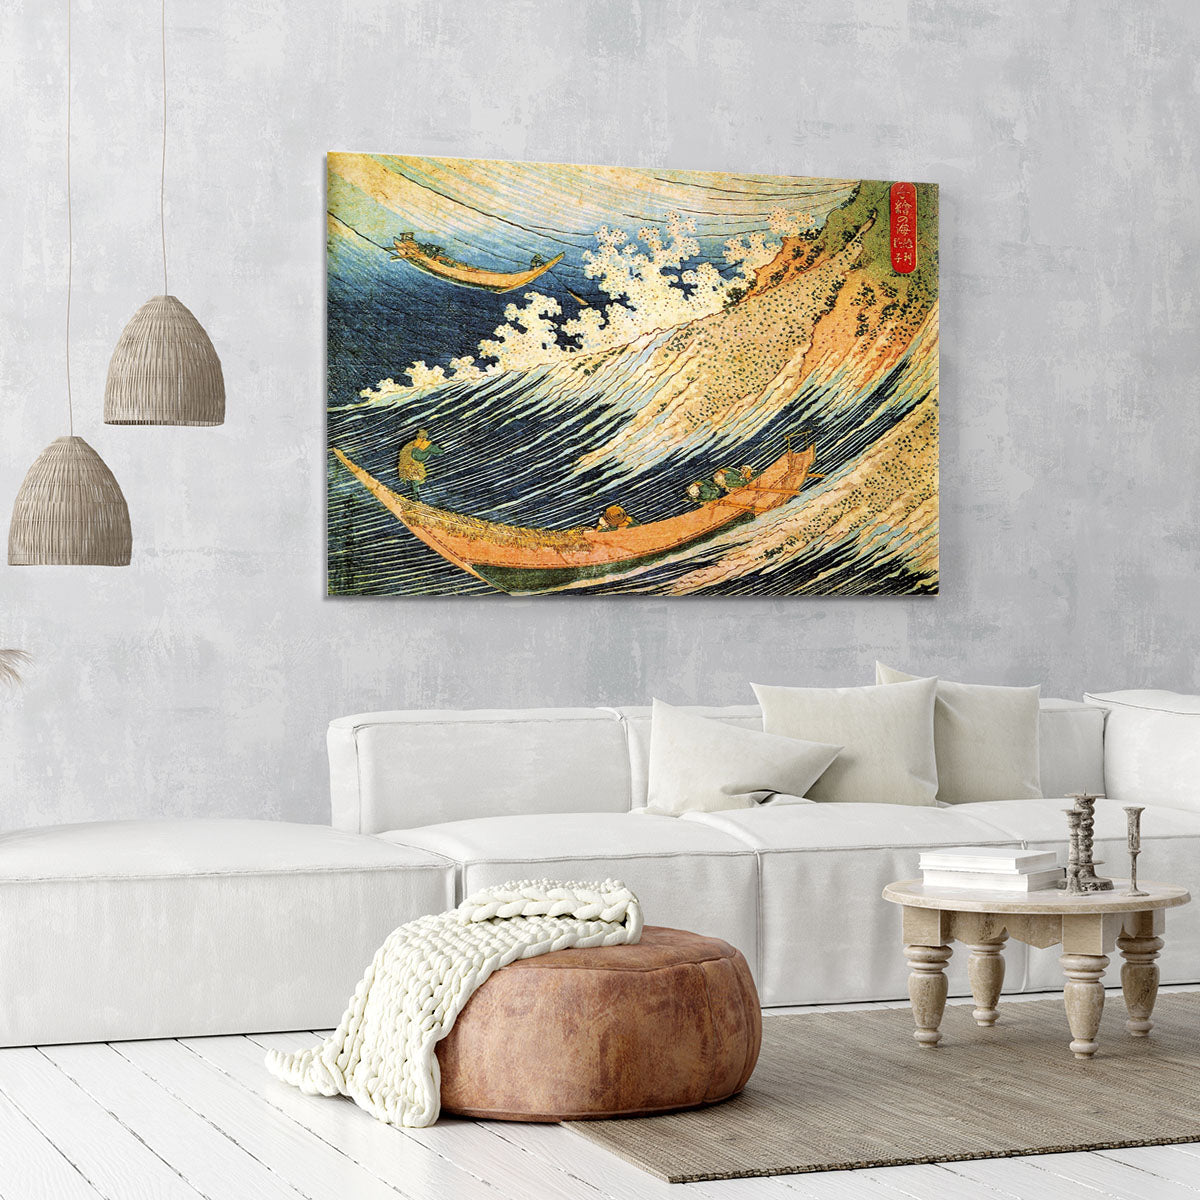 Ocean landscape 2 by Hokusai Canvas Print or Poster - Canvas Art Rocks - 6